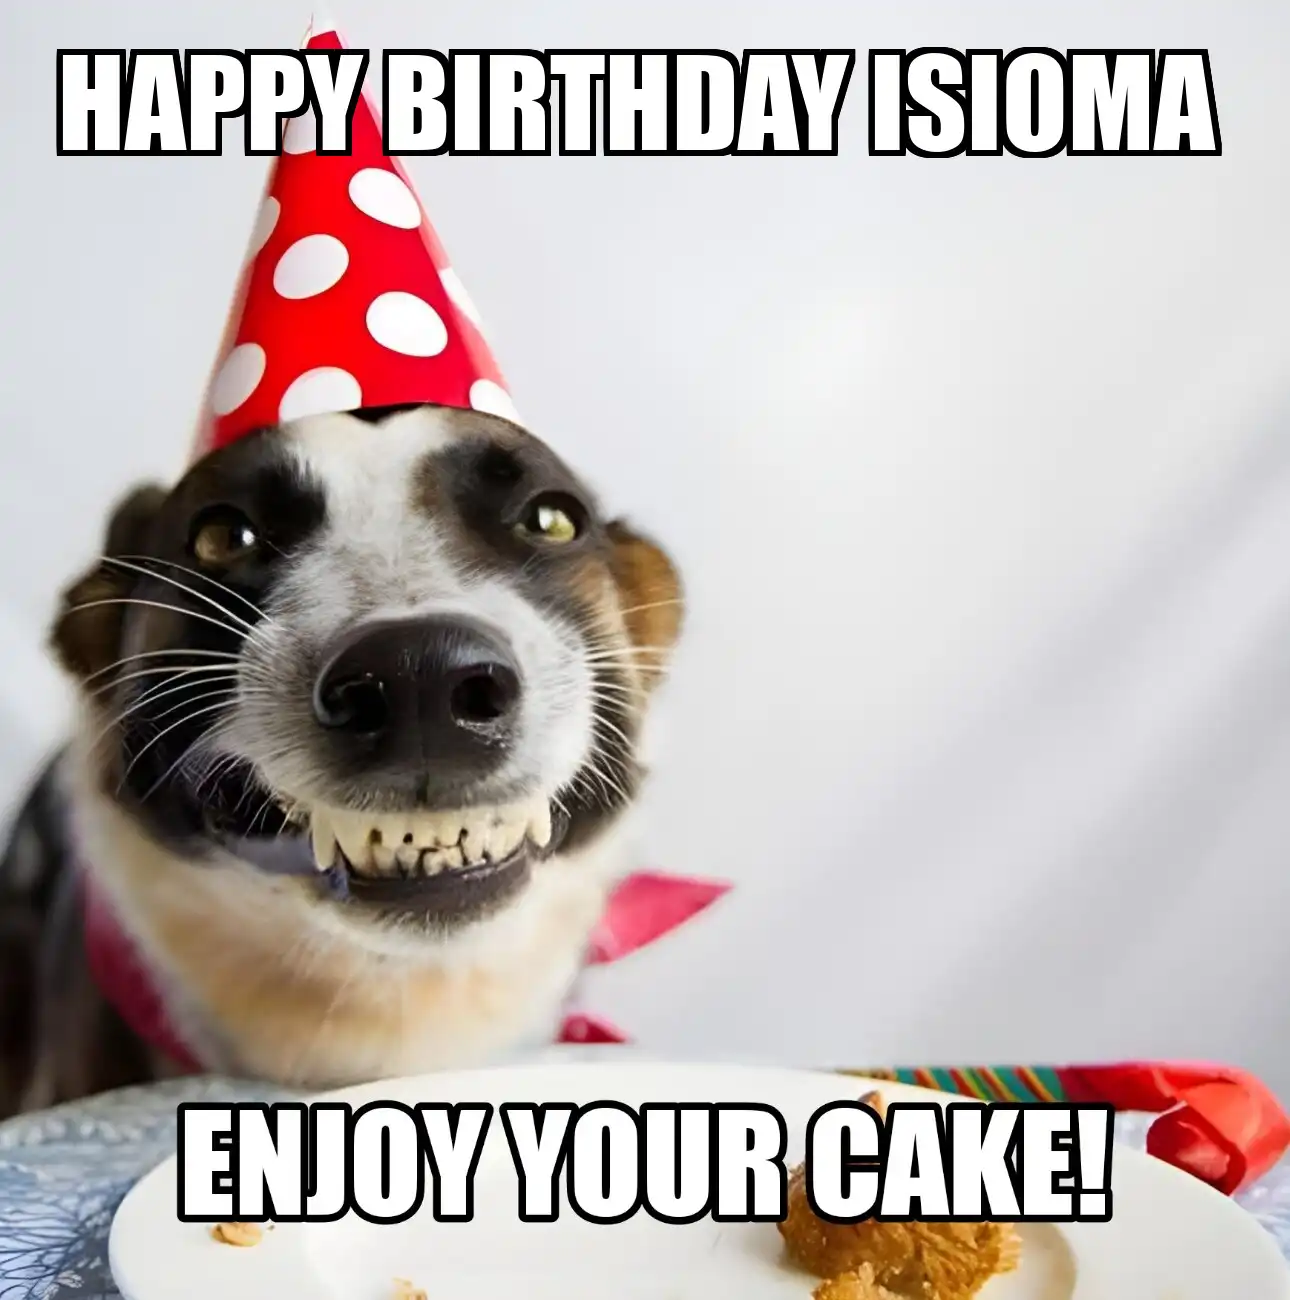 Happy Birthday Isioma Enjoy Your Cake Dog Meme